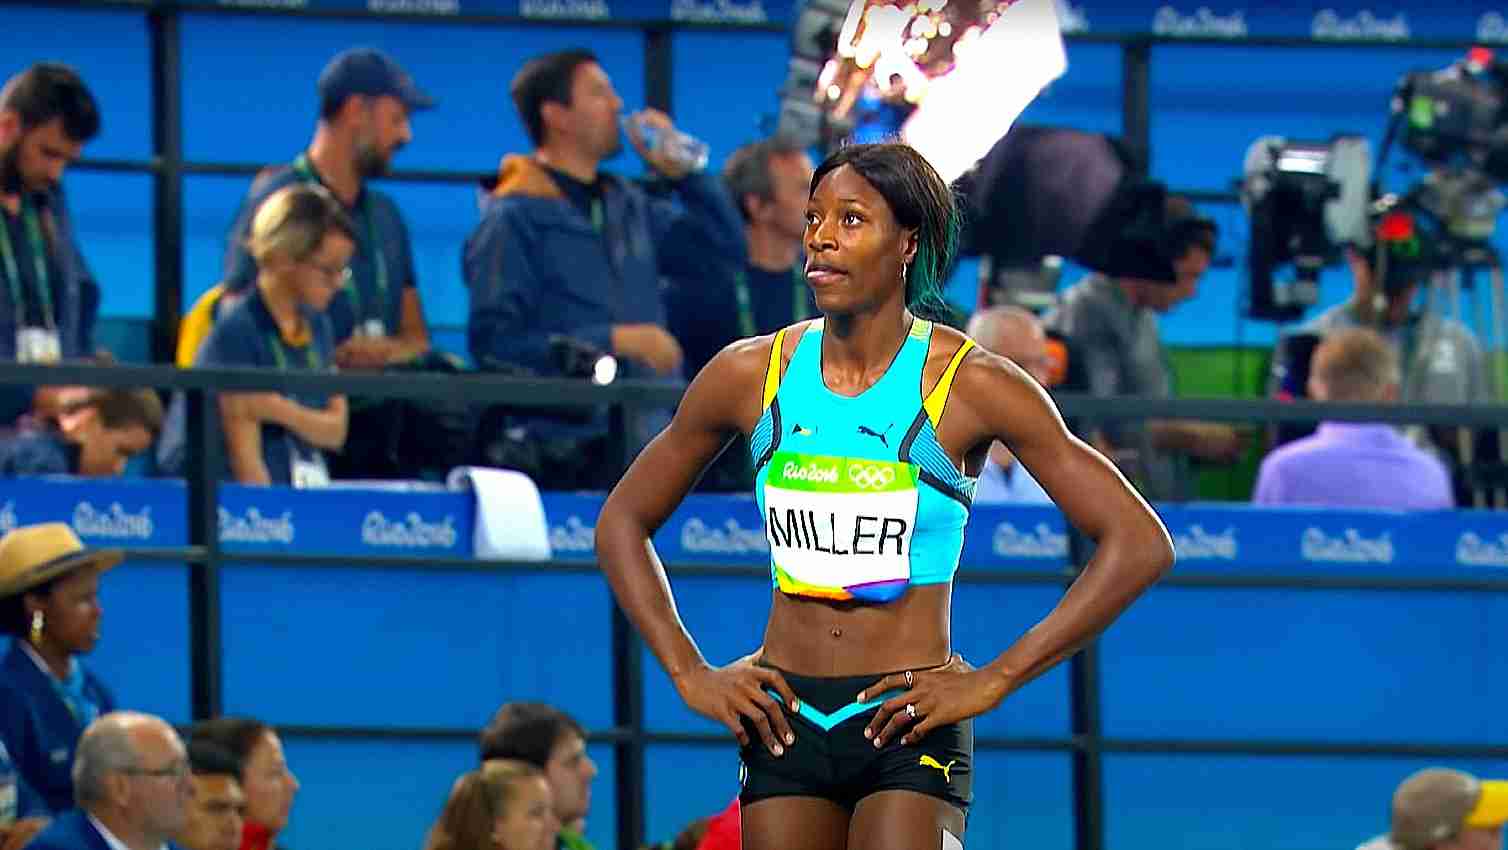 Miller-Uibo to run both the 200/400 at Tokyo Olympics